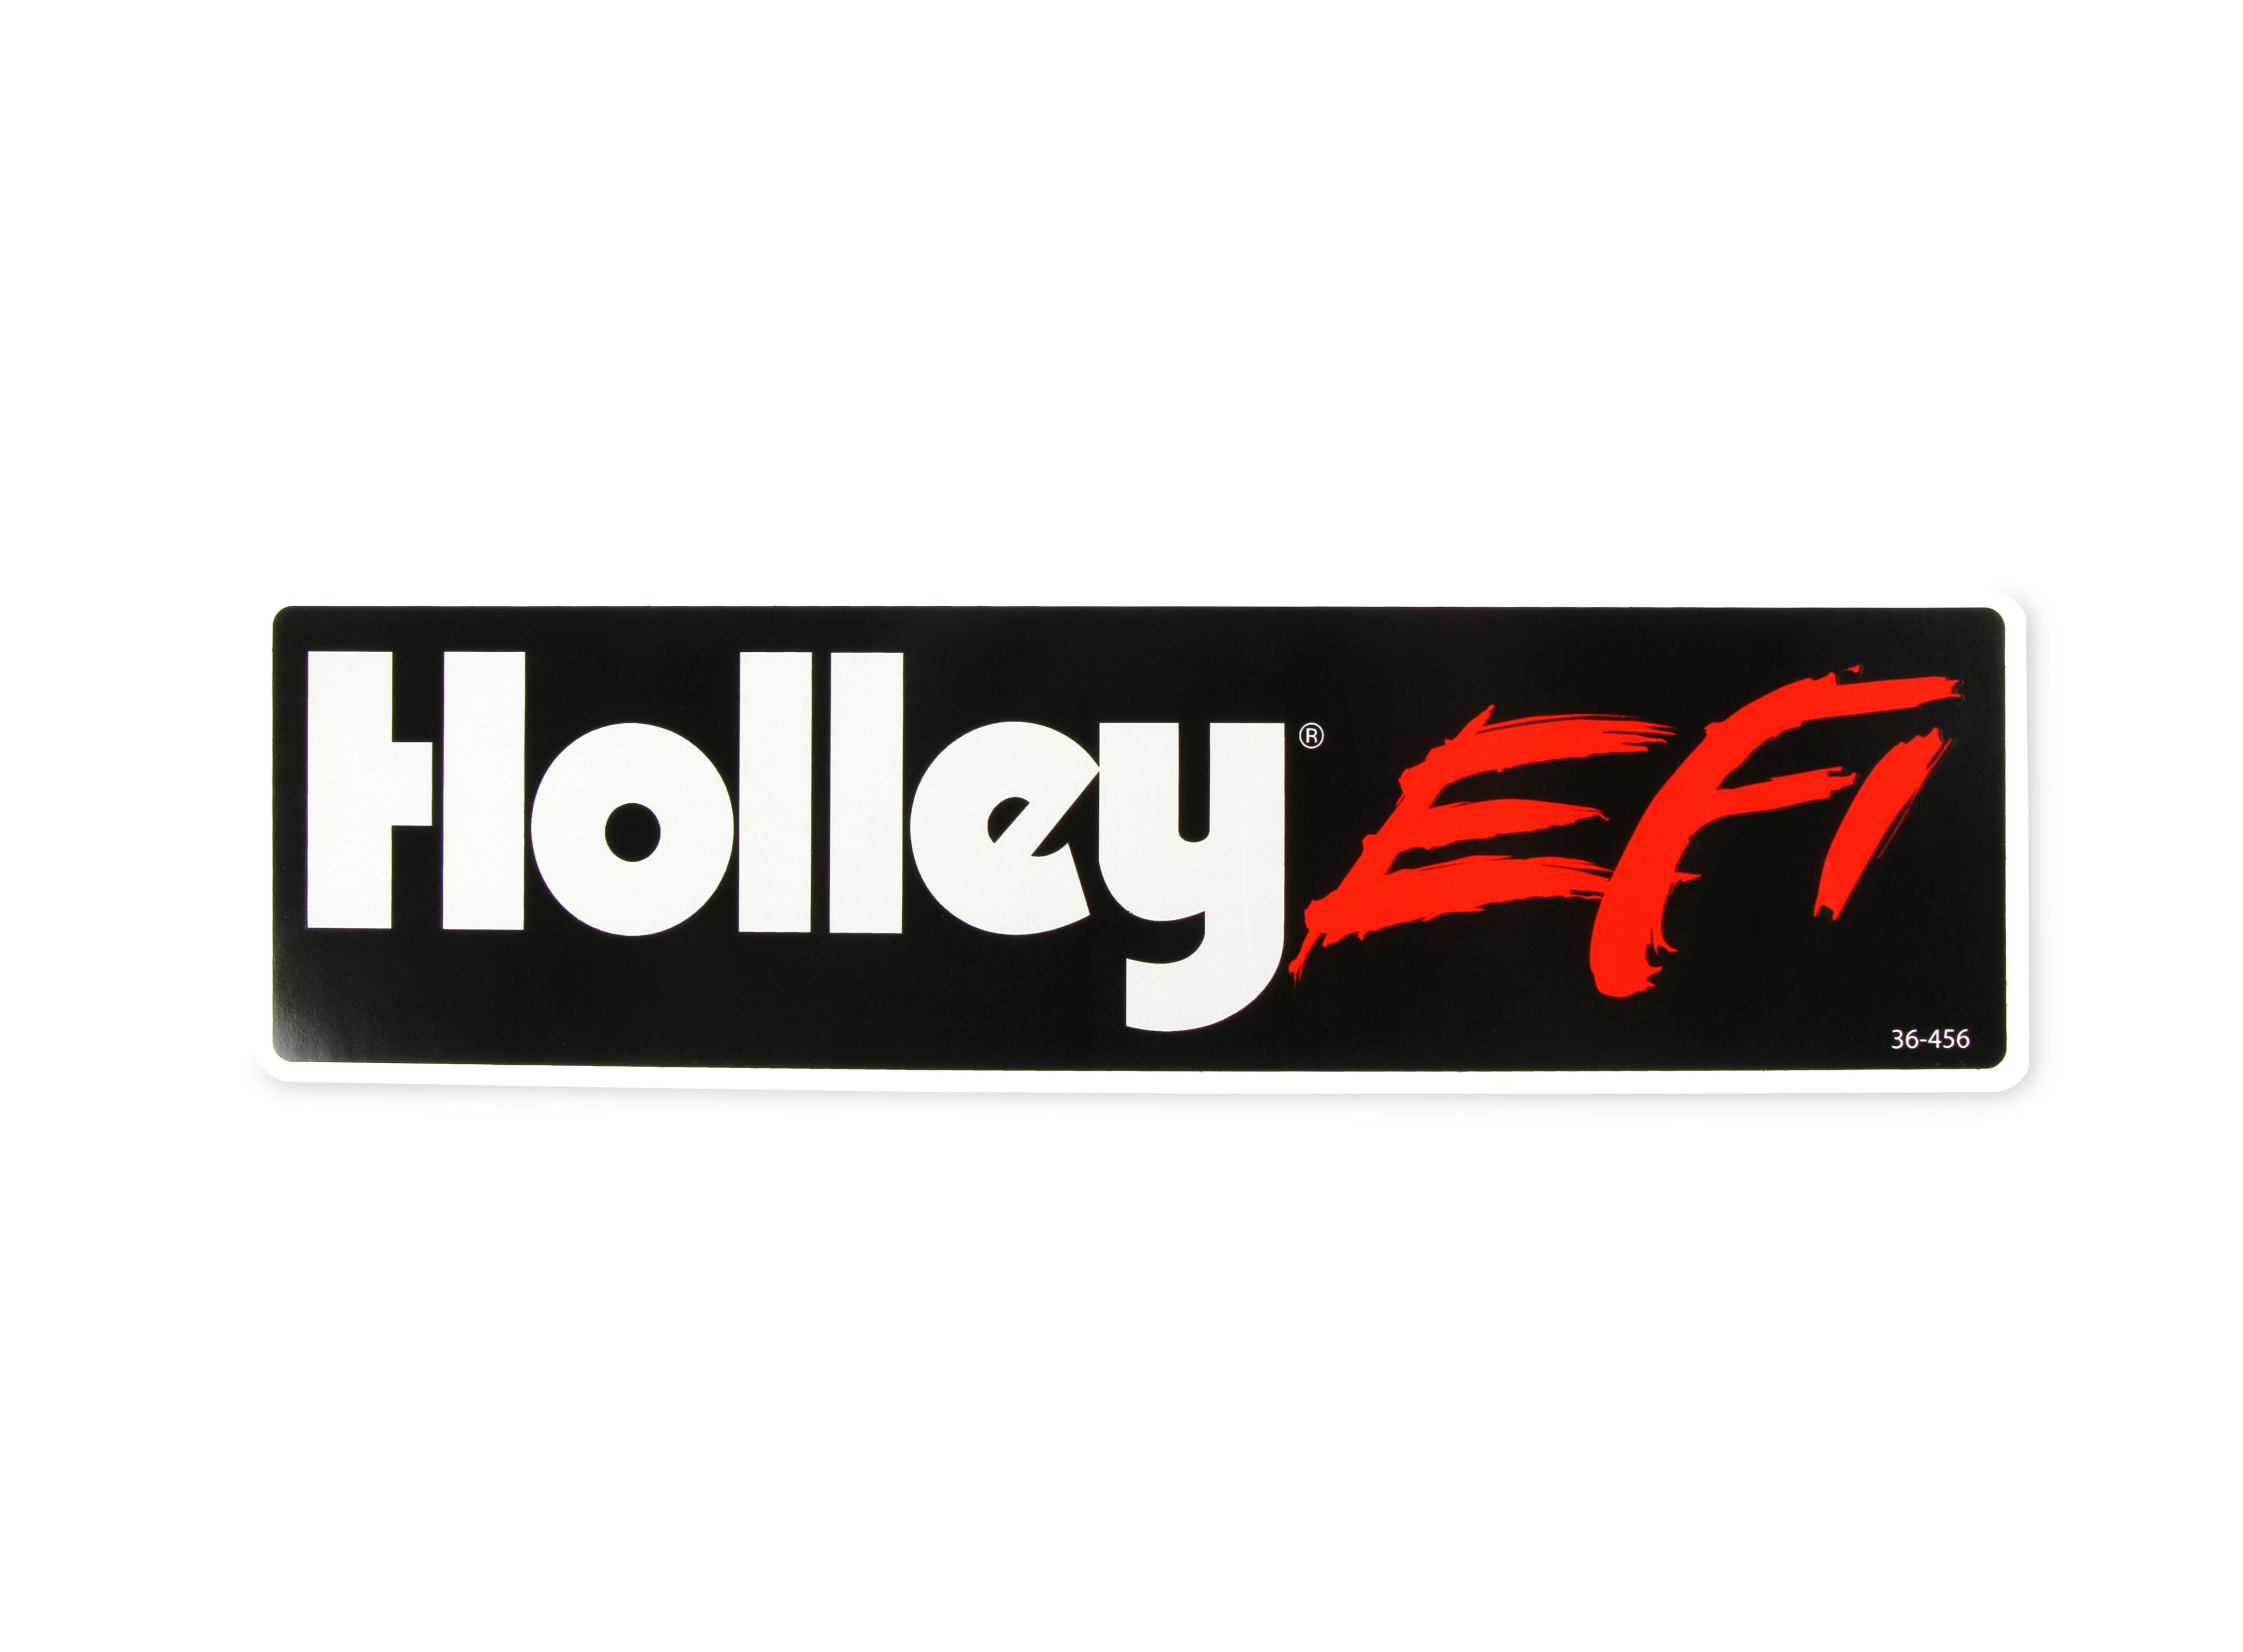 Holley EFI Exterior Decal 36-456